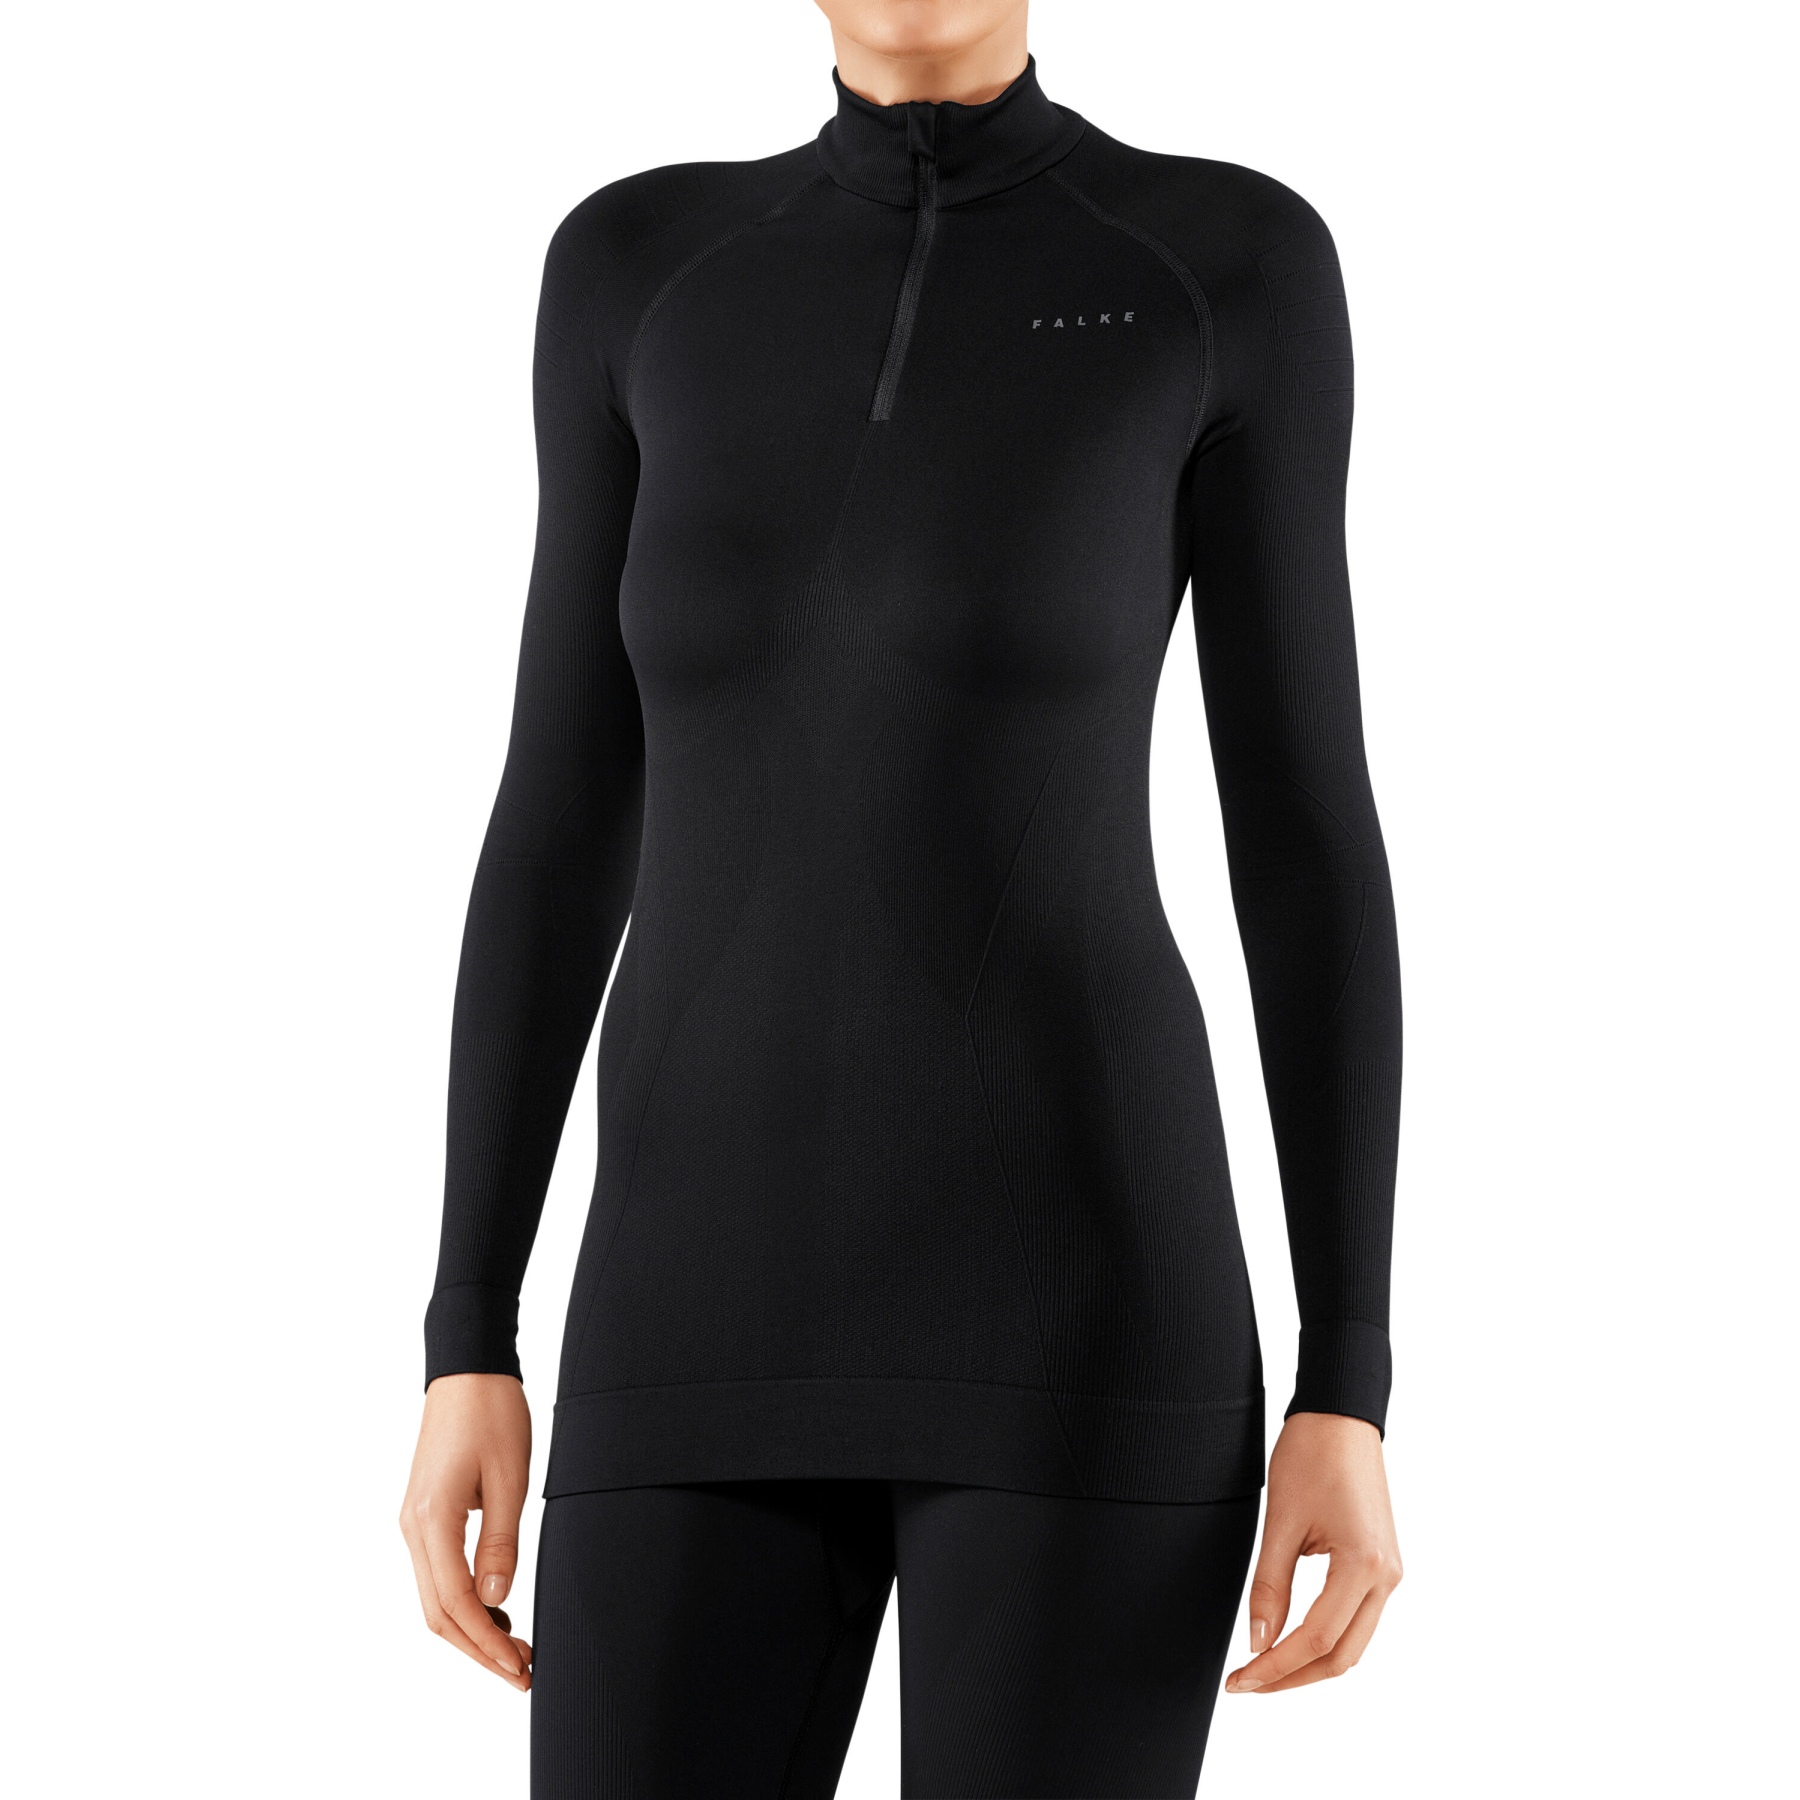 Produktbild von Falke Maximum Warm Zip Langarmshirt Damen - schwarz 3000